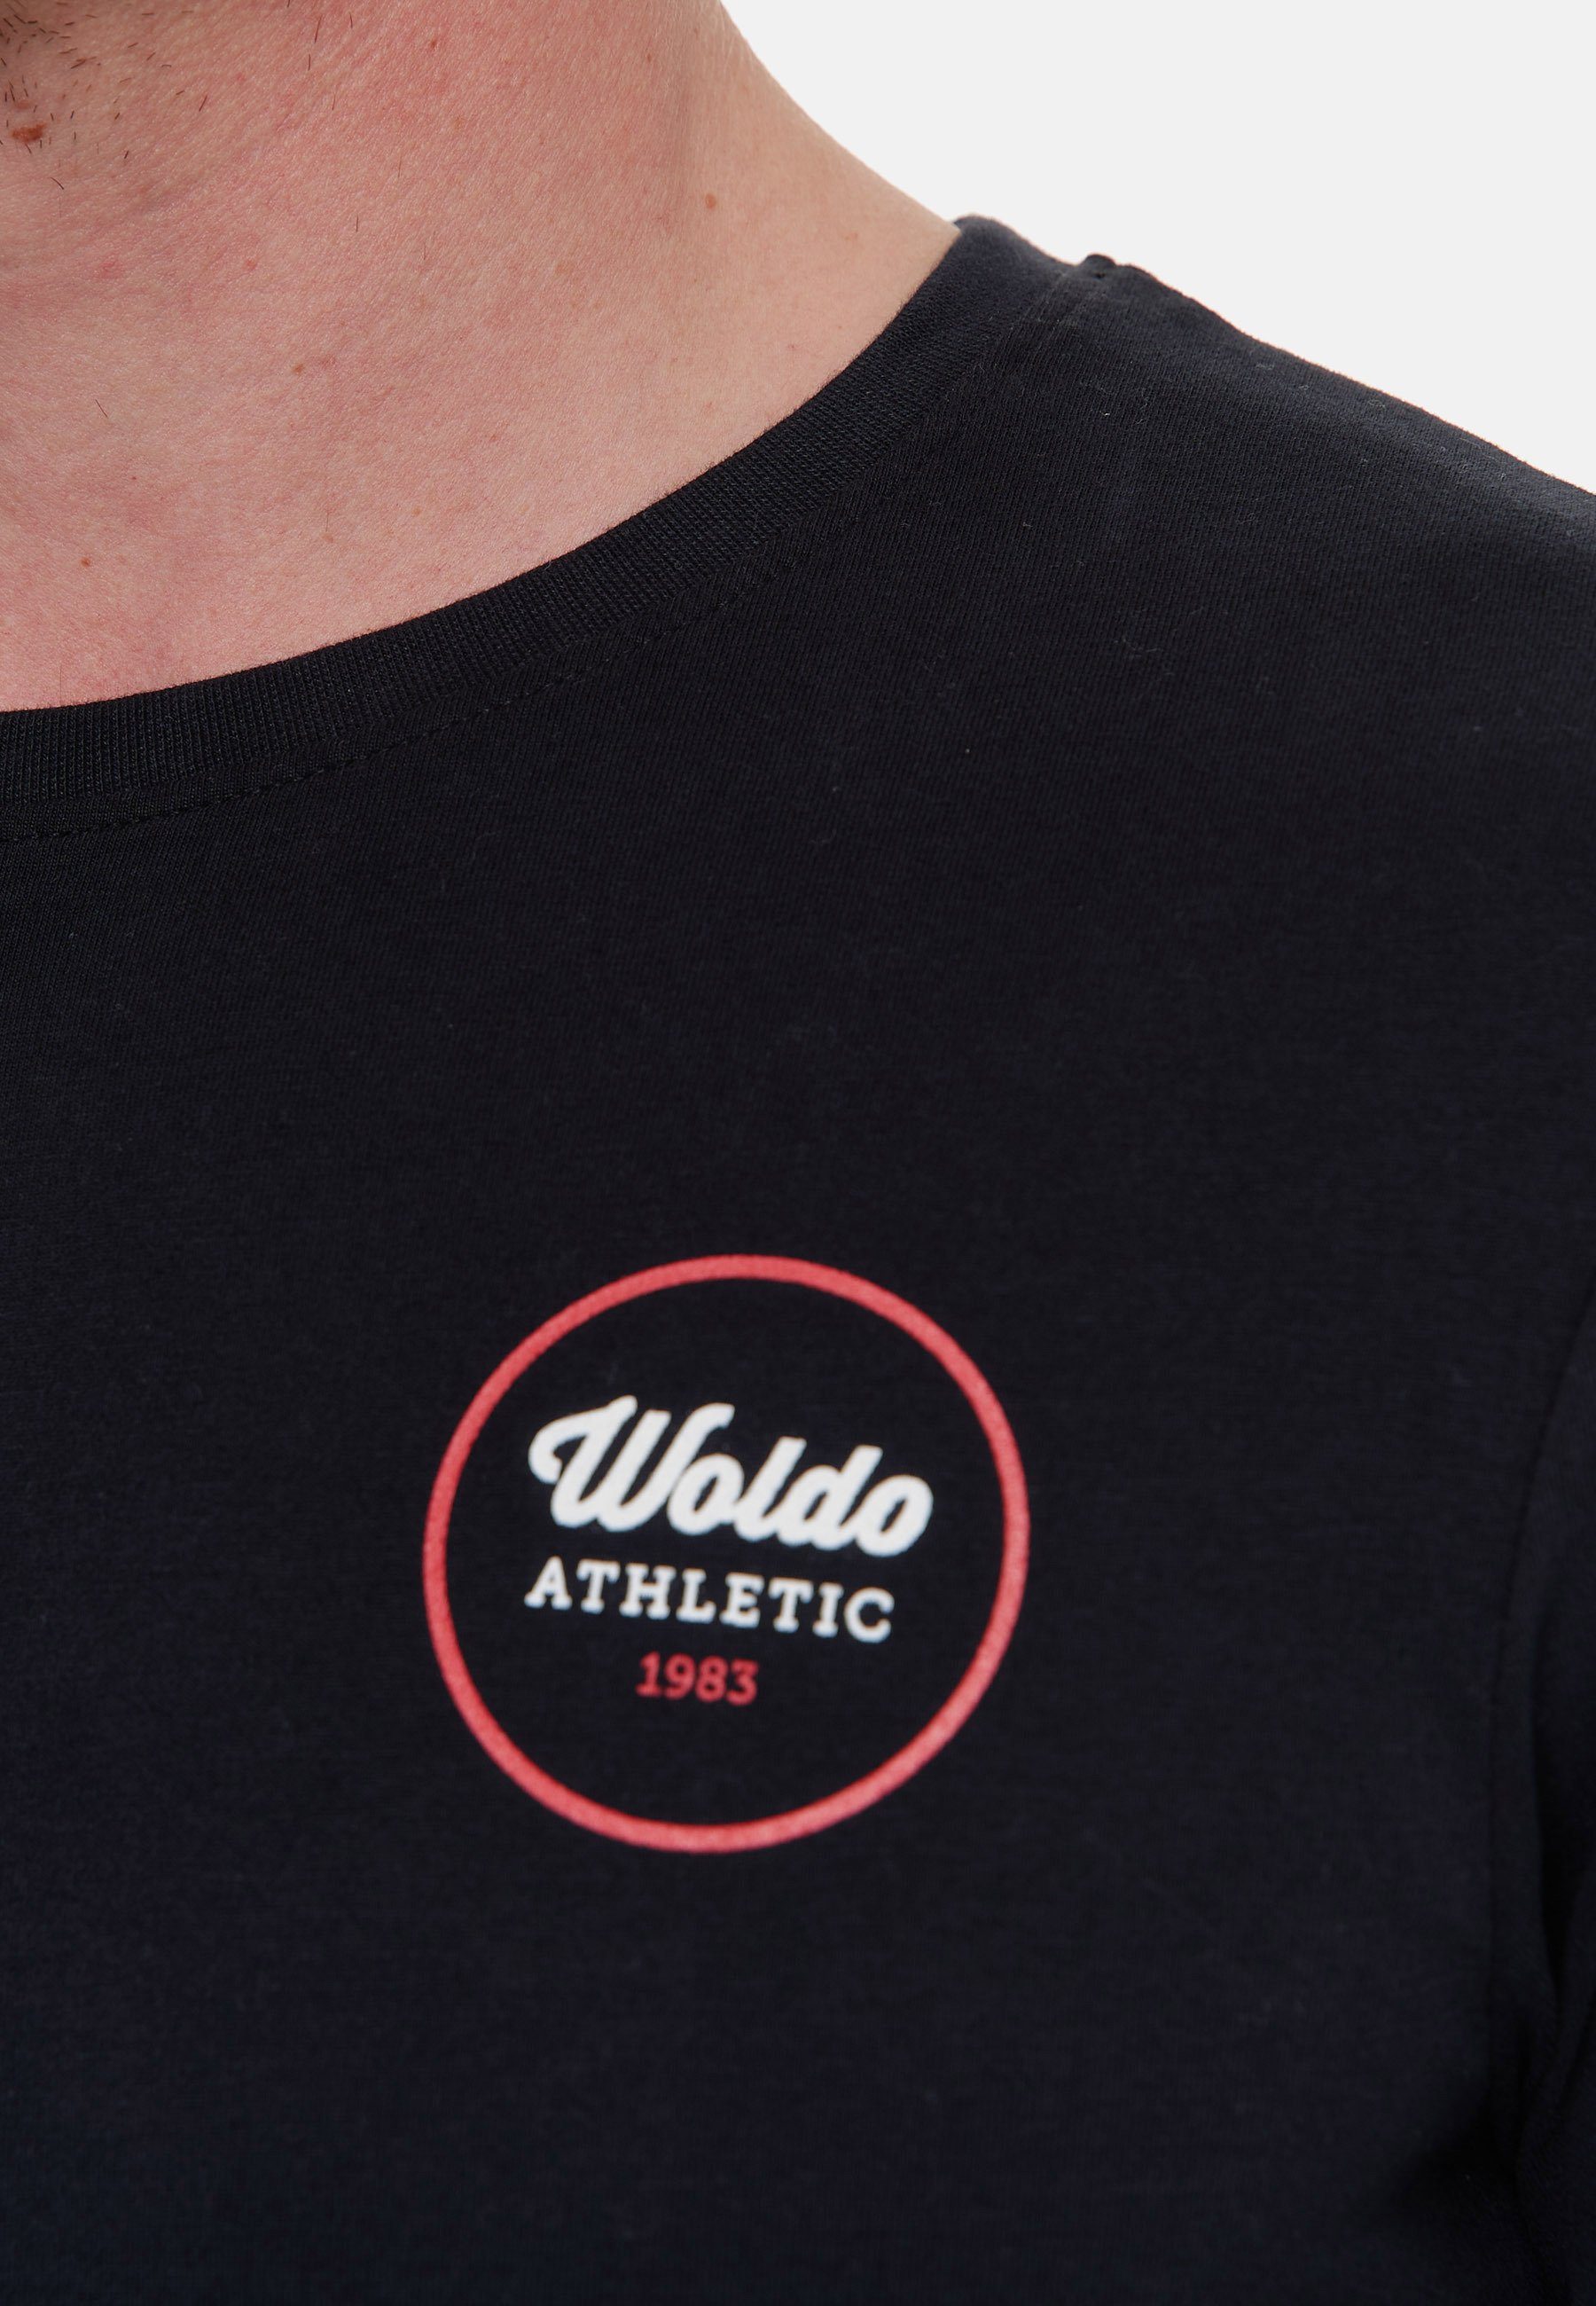 Woldo Athletic T-Shirt T-Shirt Runder schwarz-rot Print